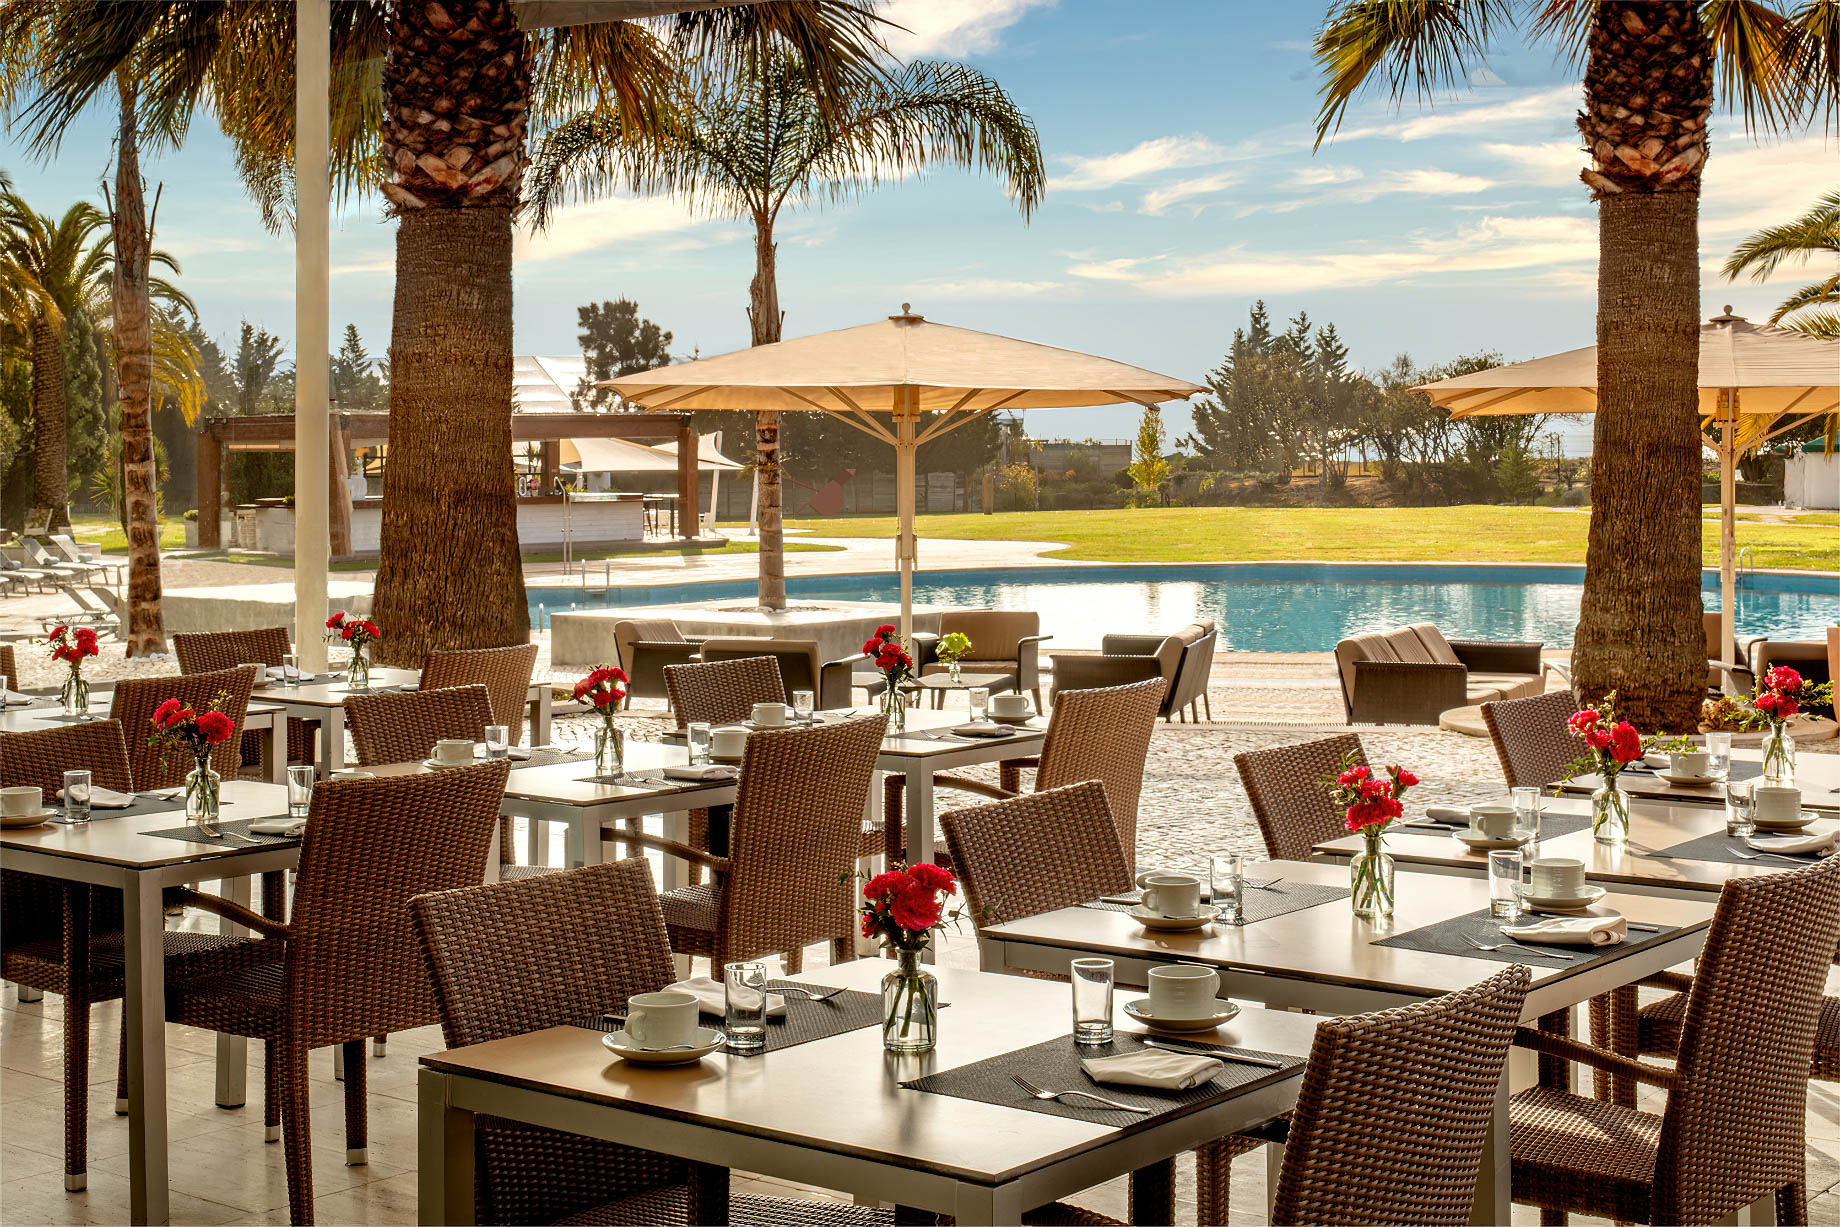 Tivoli Marina Vilamoura Algarve Resort – Portugal – Poolside Dining